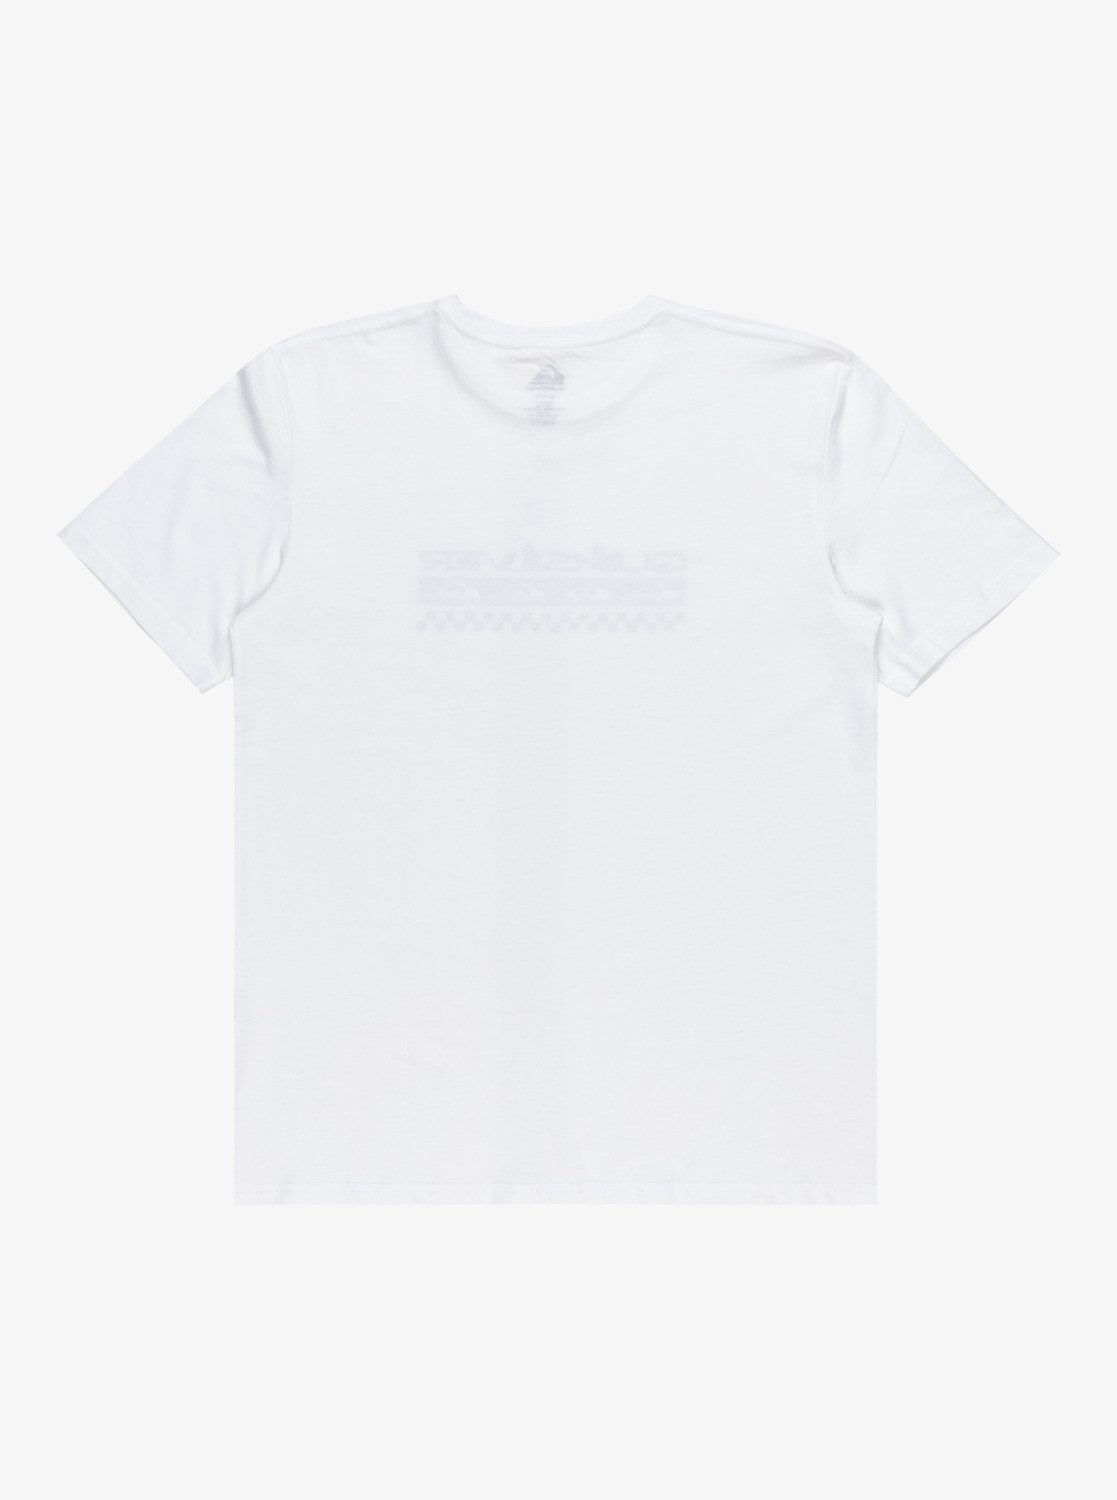 White Omni Turn Quiksilver T-Shirt Check